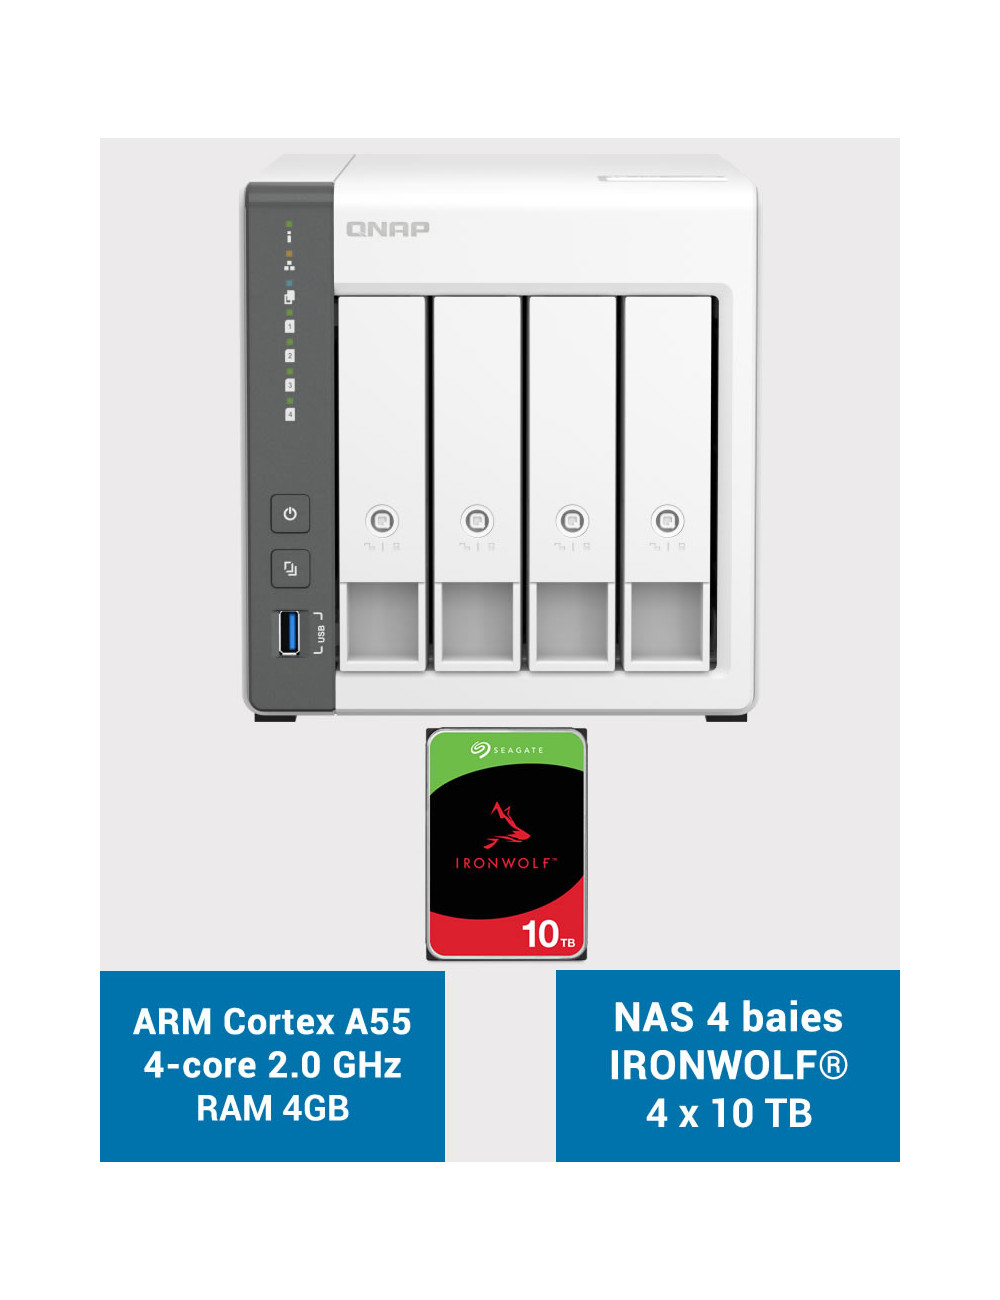 QNAP TS-433 4GB NAS Server IRONWOLF 40TB (4x10TB)